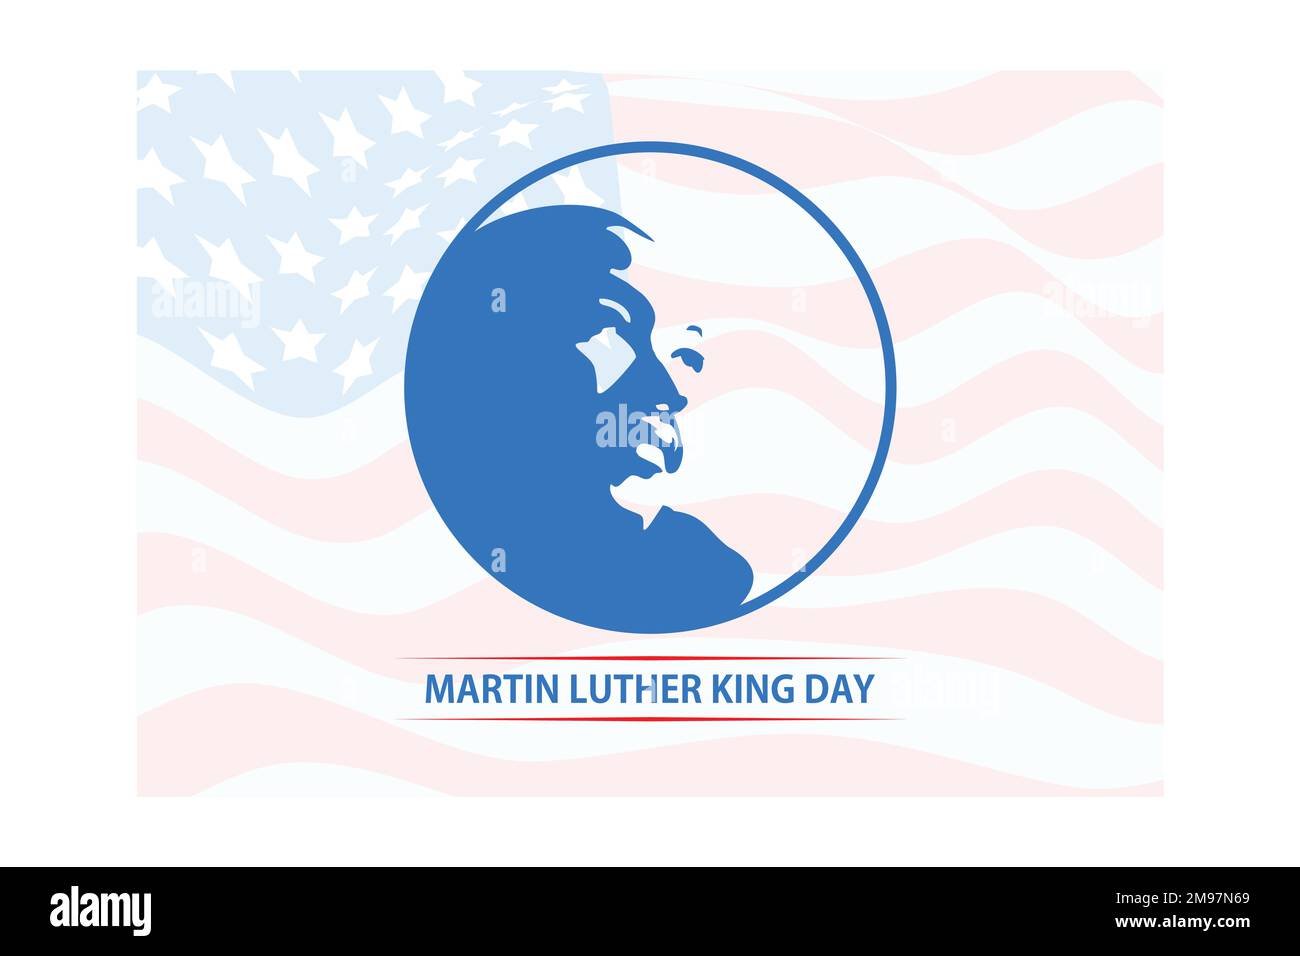 Illustration vectorielle pour Martin Luther King Jr sur fond abstrait, illustration moderne vectorielle plate Illustration de Vecteur